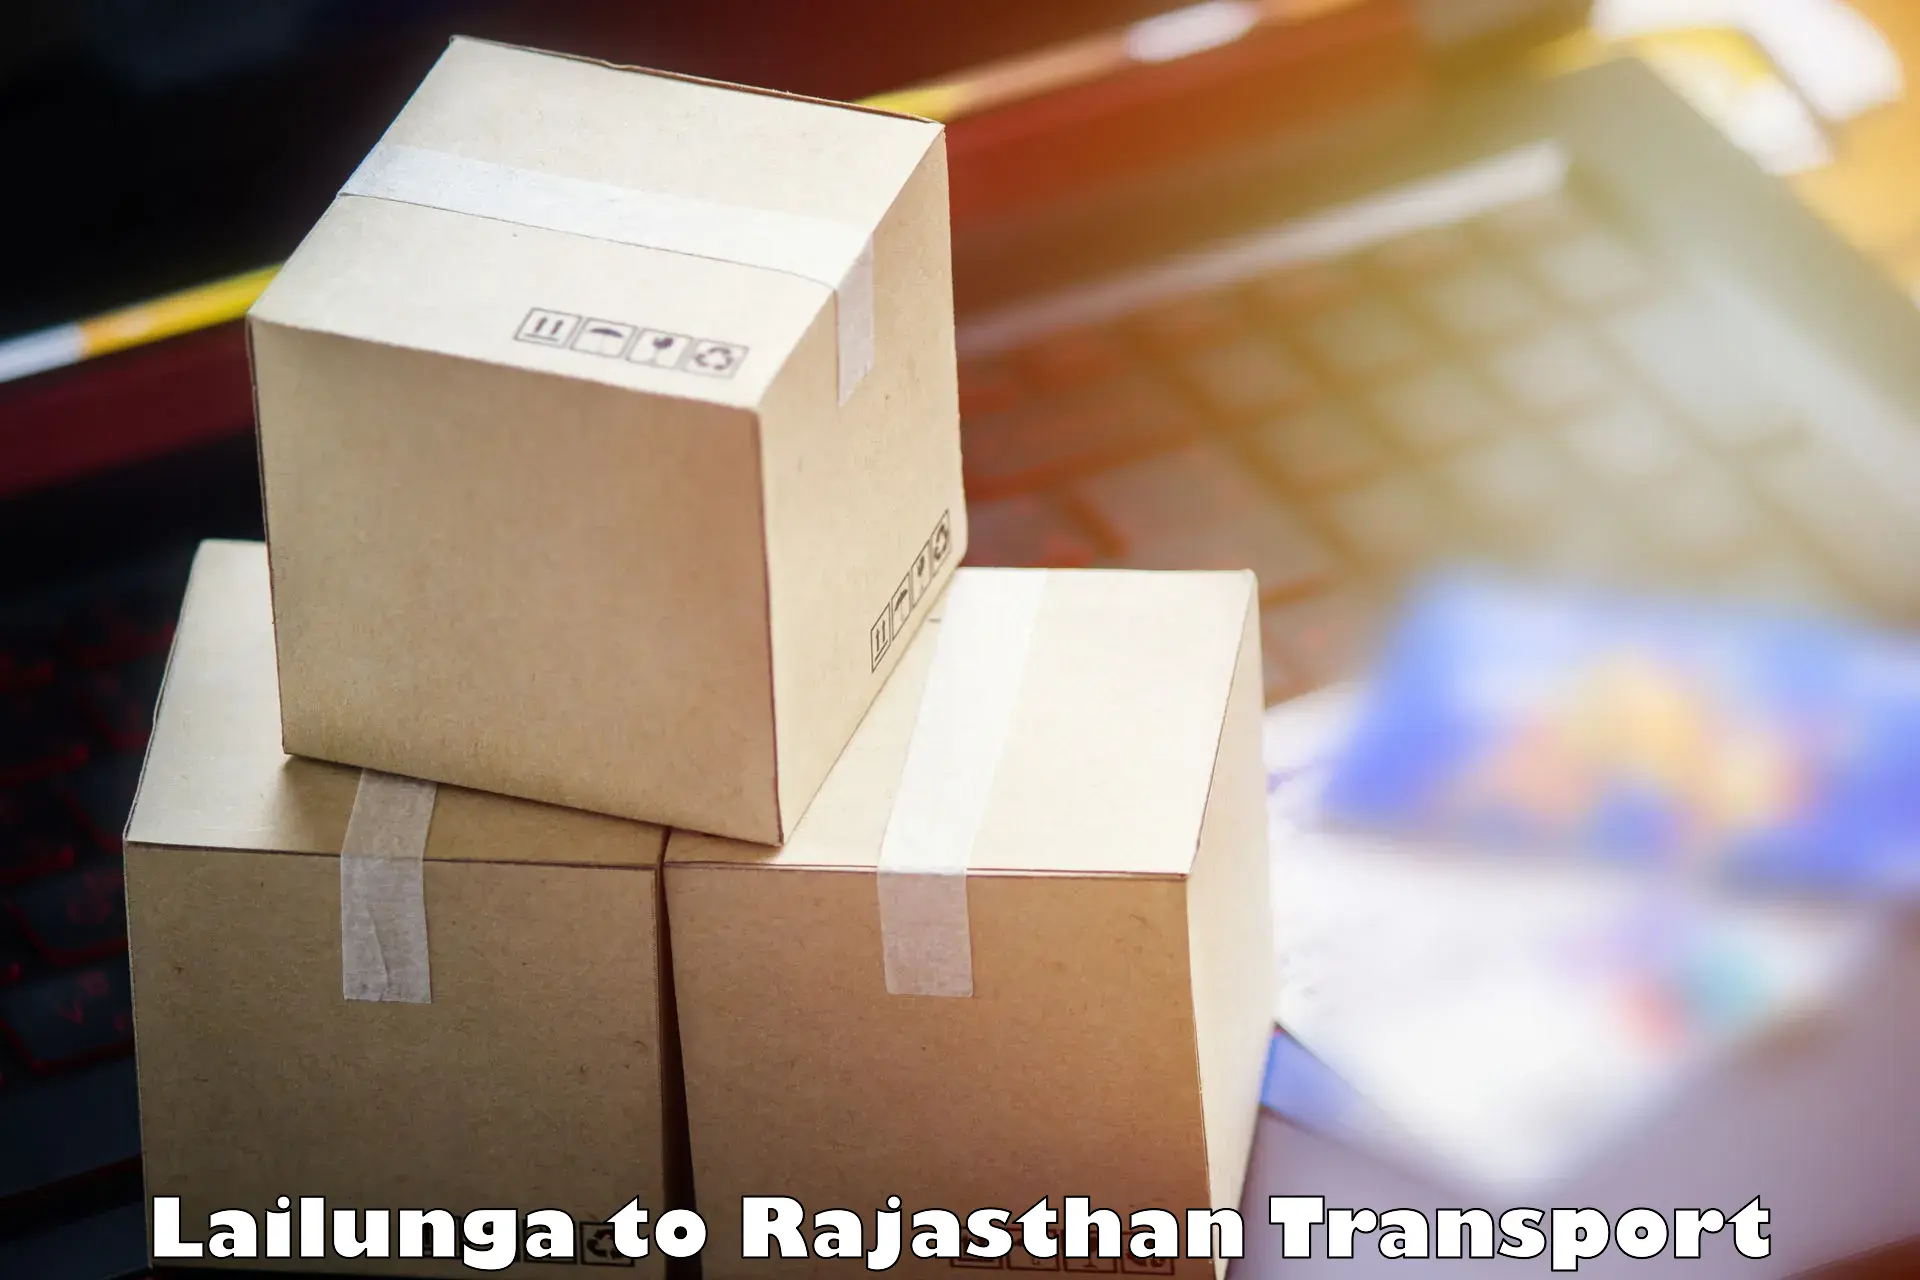 Furniture transport service Lailunga to Asind